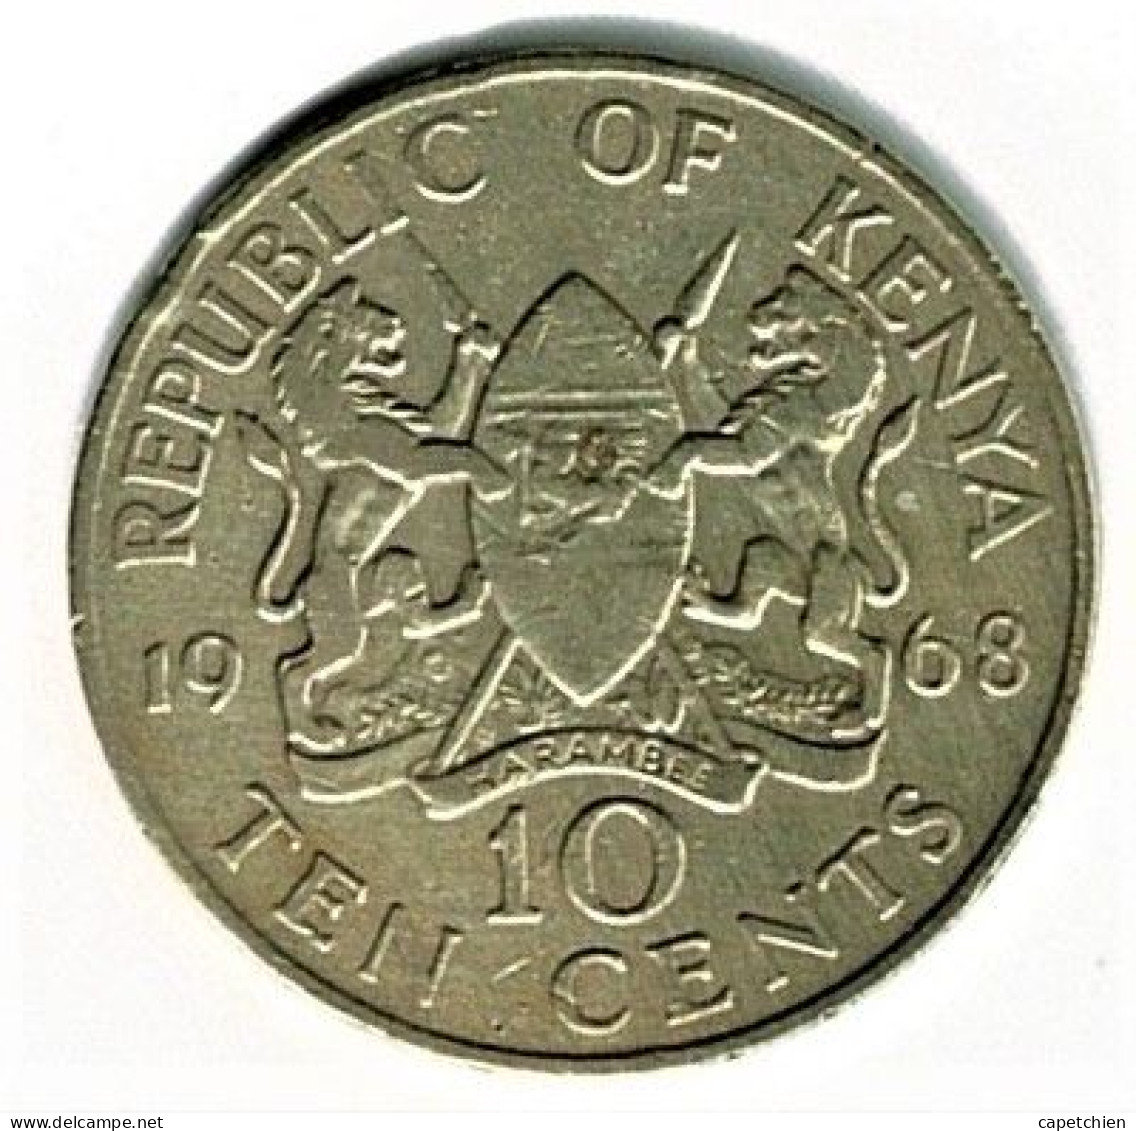 KENYA / 10 CENTS / 1968 / JOMO KENYATTA / SANS LEGENDE - Kenya